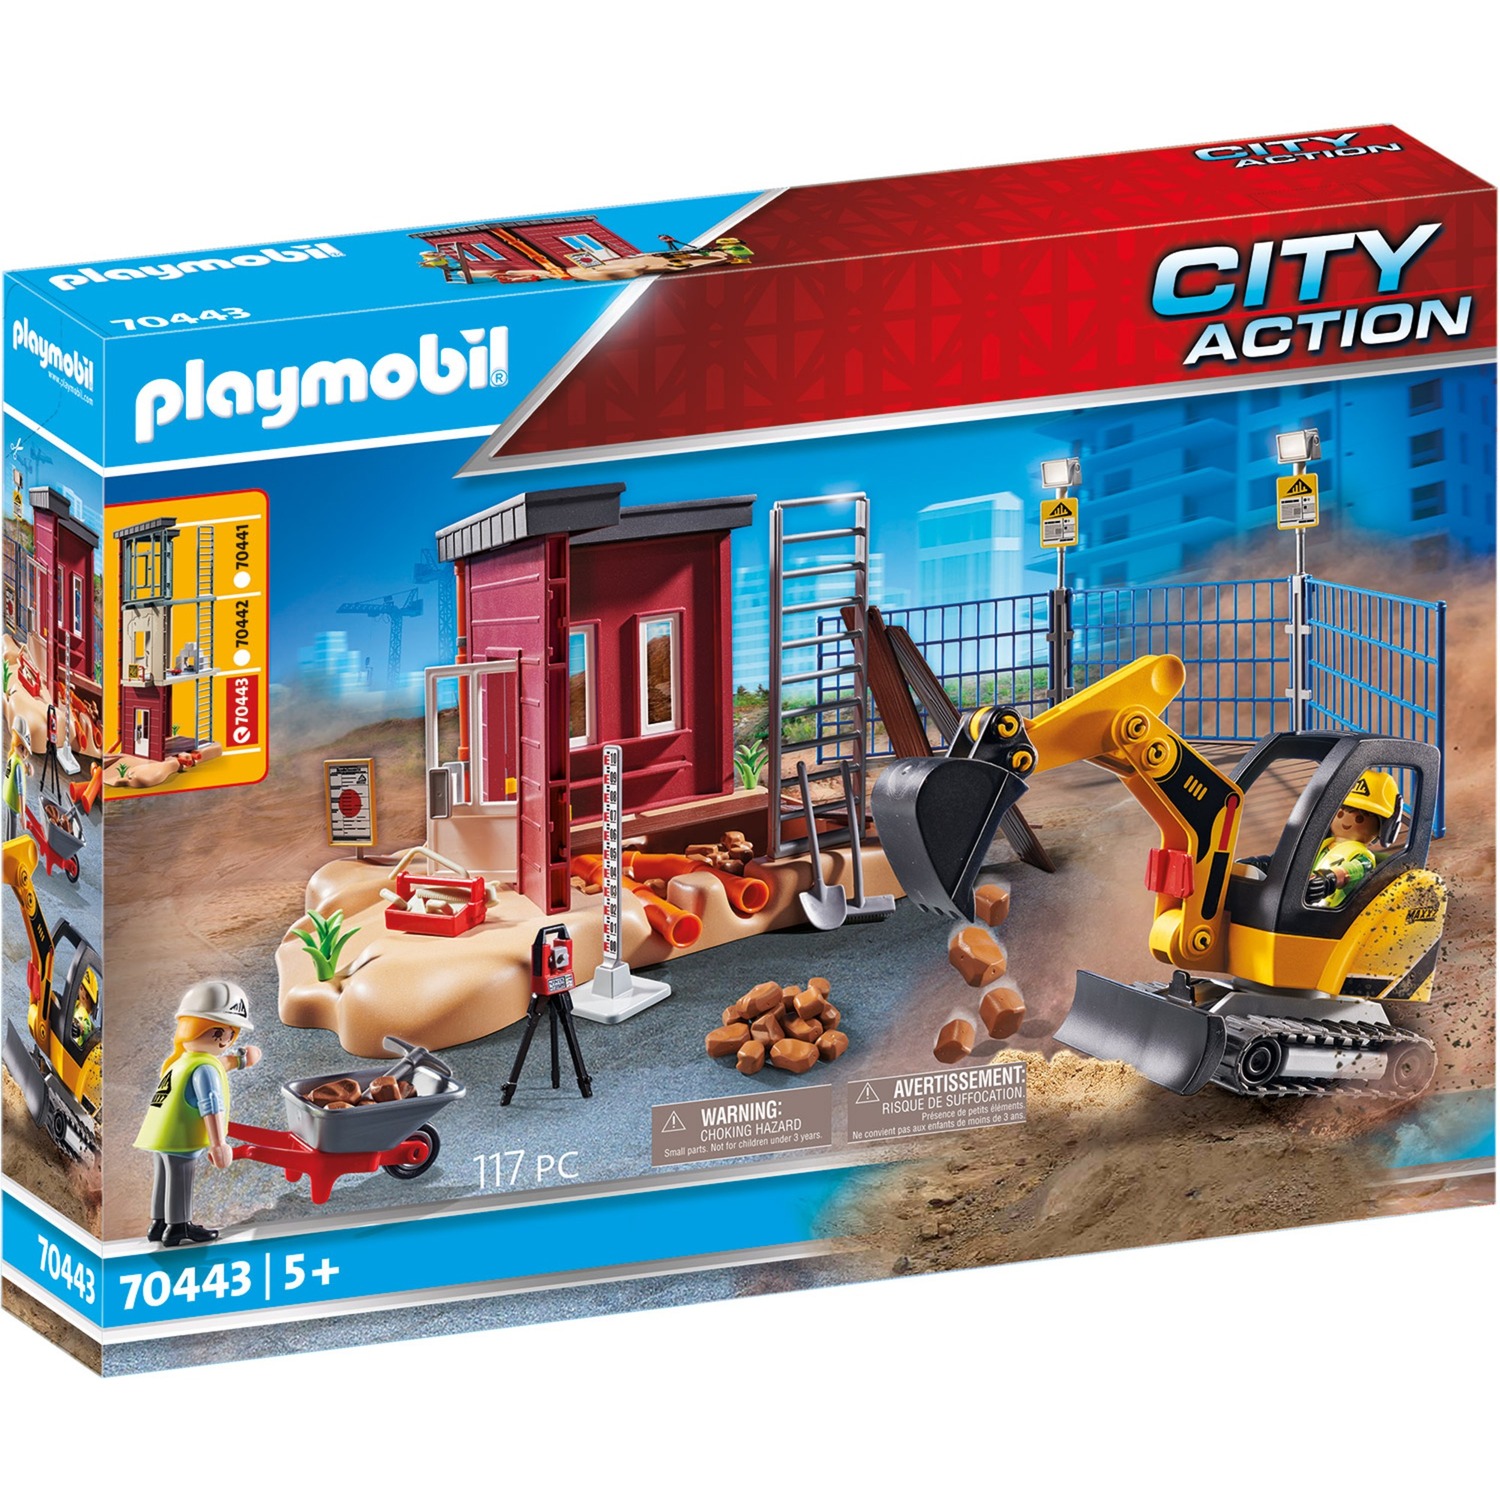 Spielzeug: PLAYMOBIL 70443 City Action - Minibagger mit Bauteil